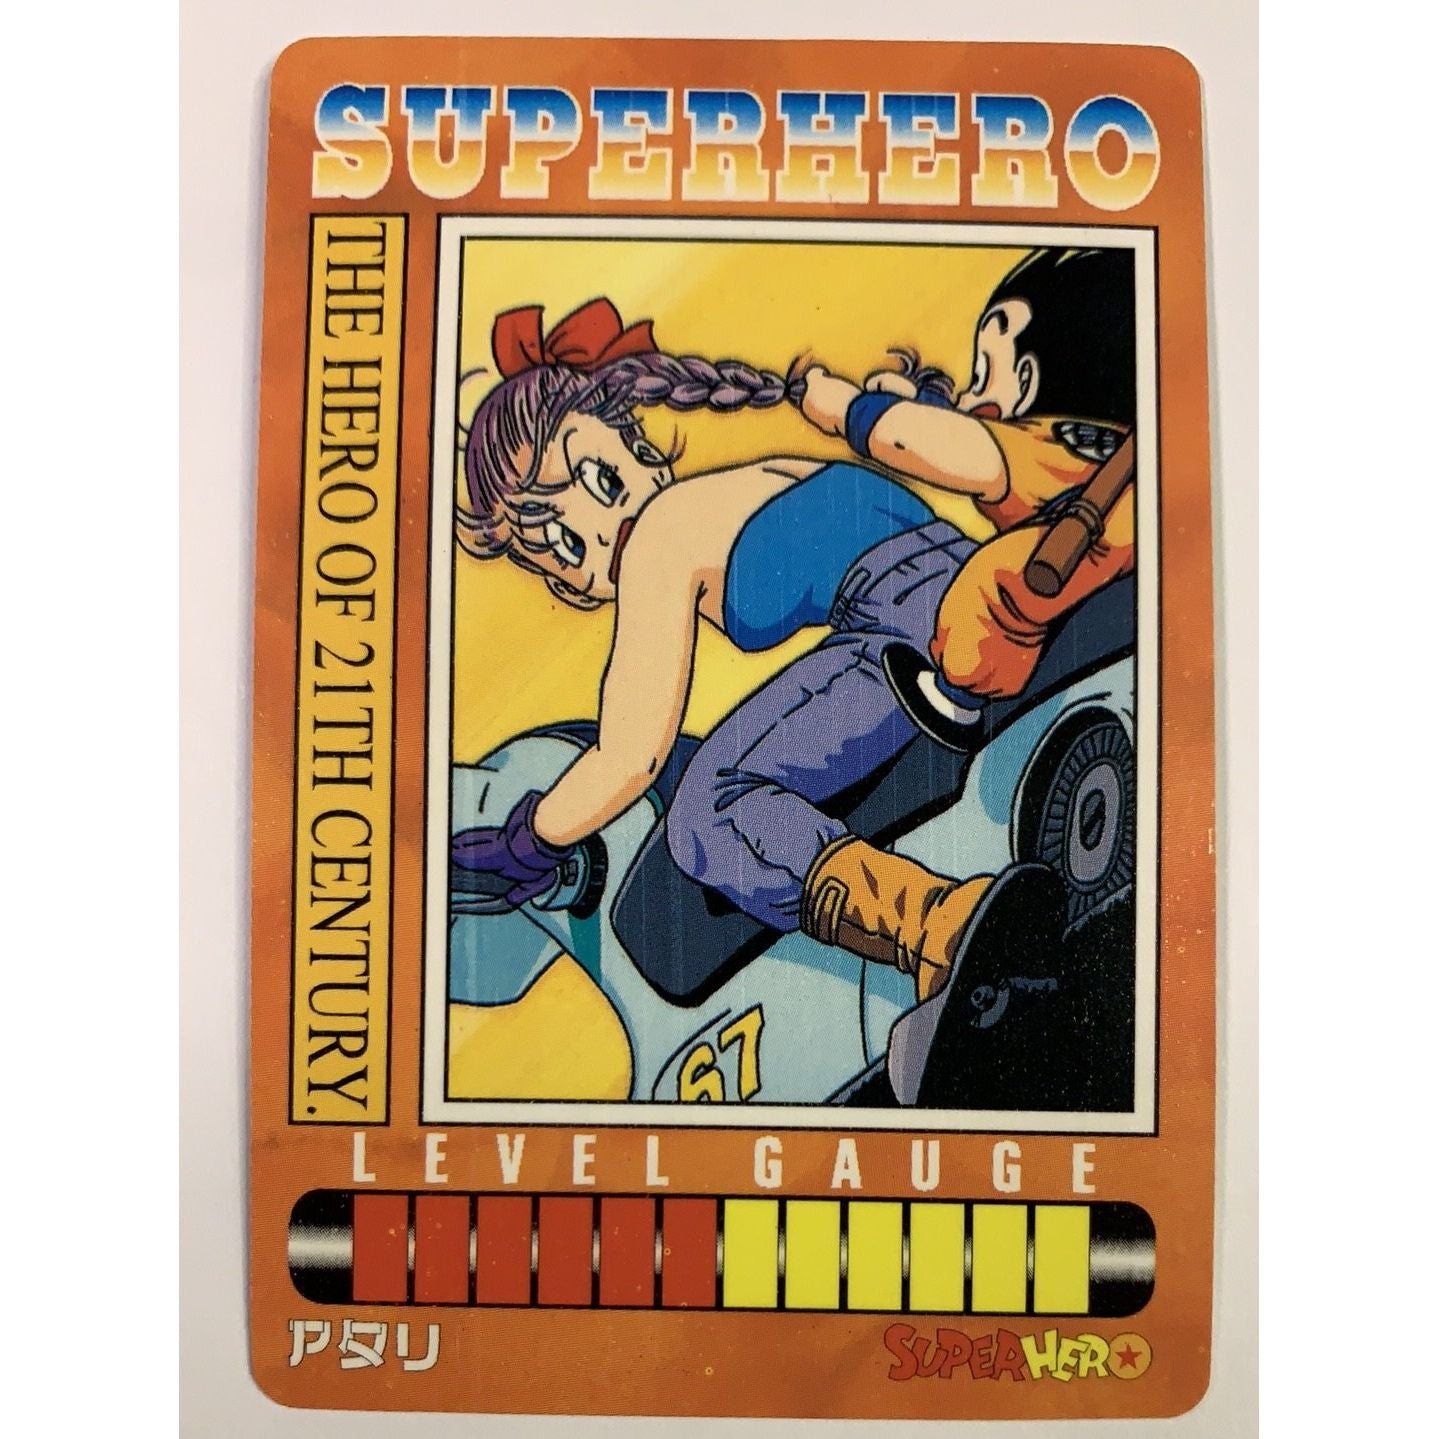  1995 Cardass Adali Super Hero Special Card S-104 Silver Foil Bulma & Goku  Local Legends Cards & Collectibles